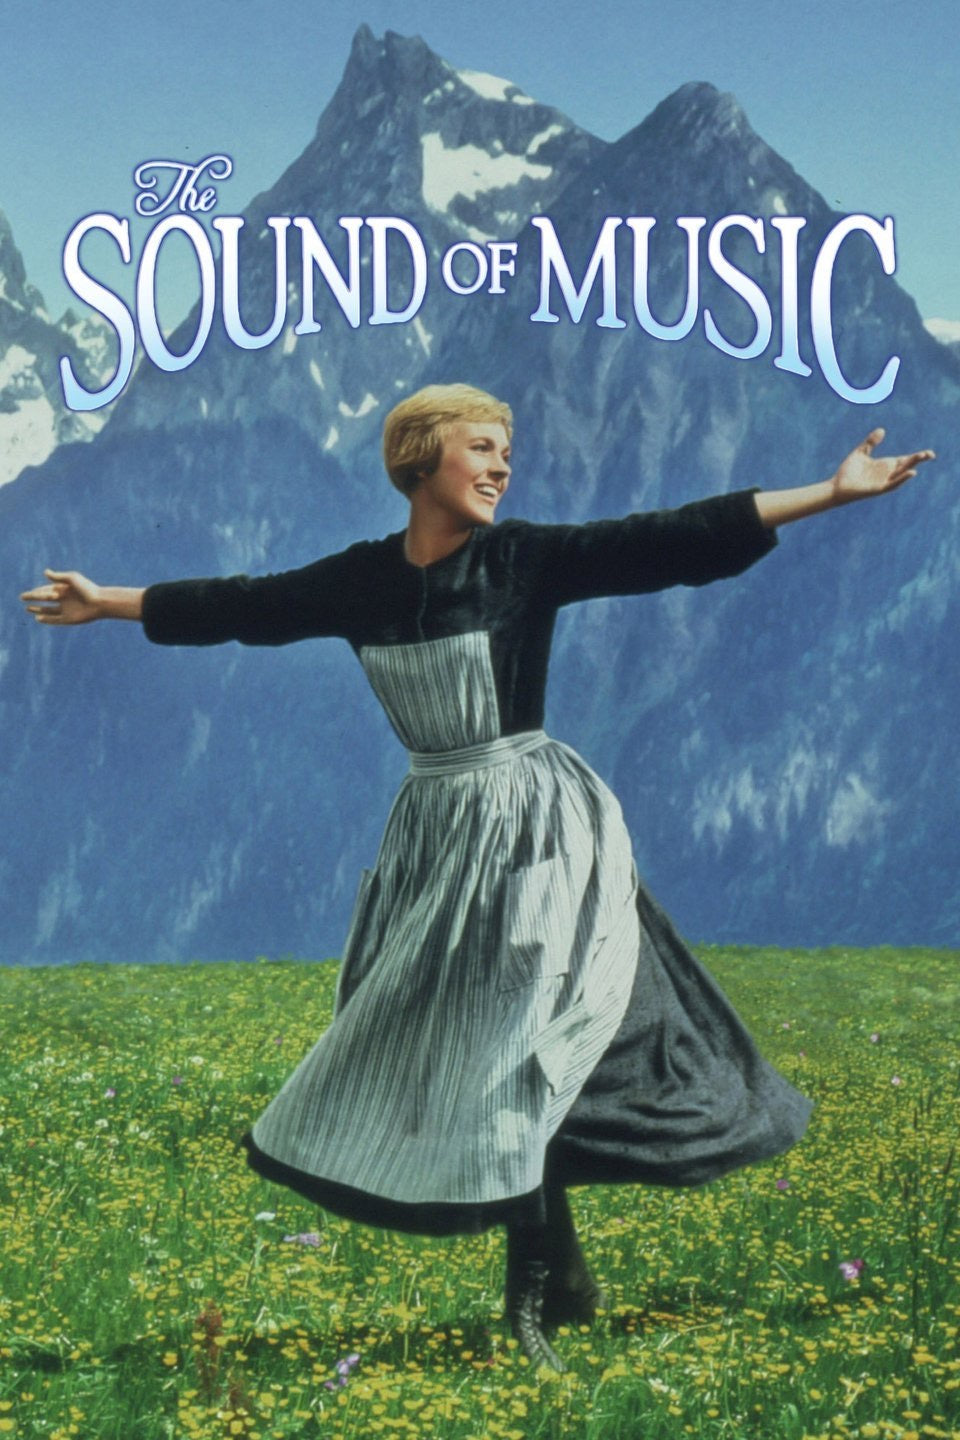 The Sound of Music (1965: Ports Via MA) iTunes HD or Vudu / Movies Anywhere HD code